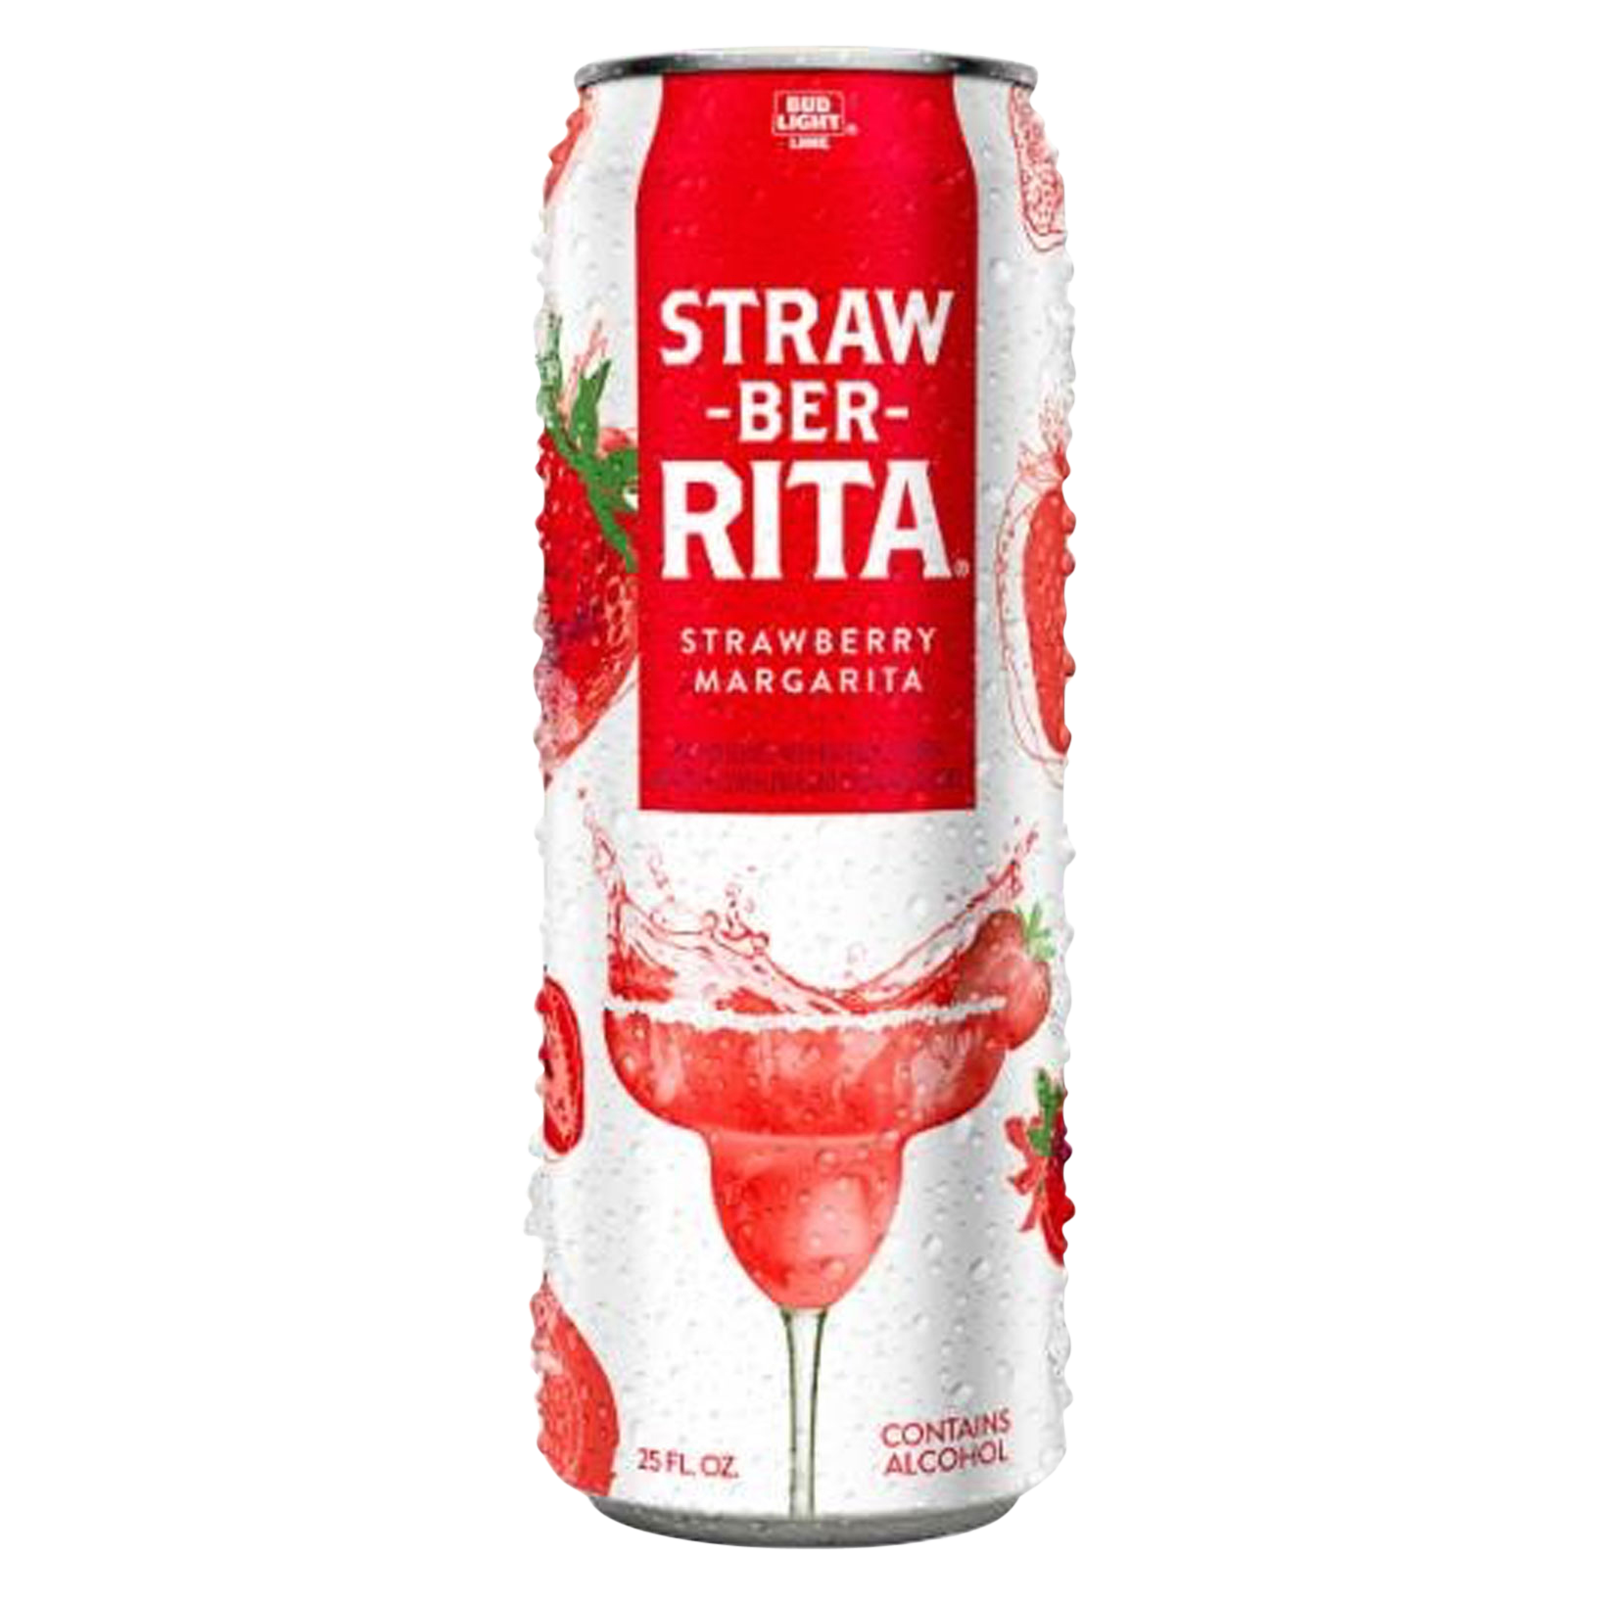 Straw-Ber-Rita Single 25oz Can 8.0% ABV